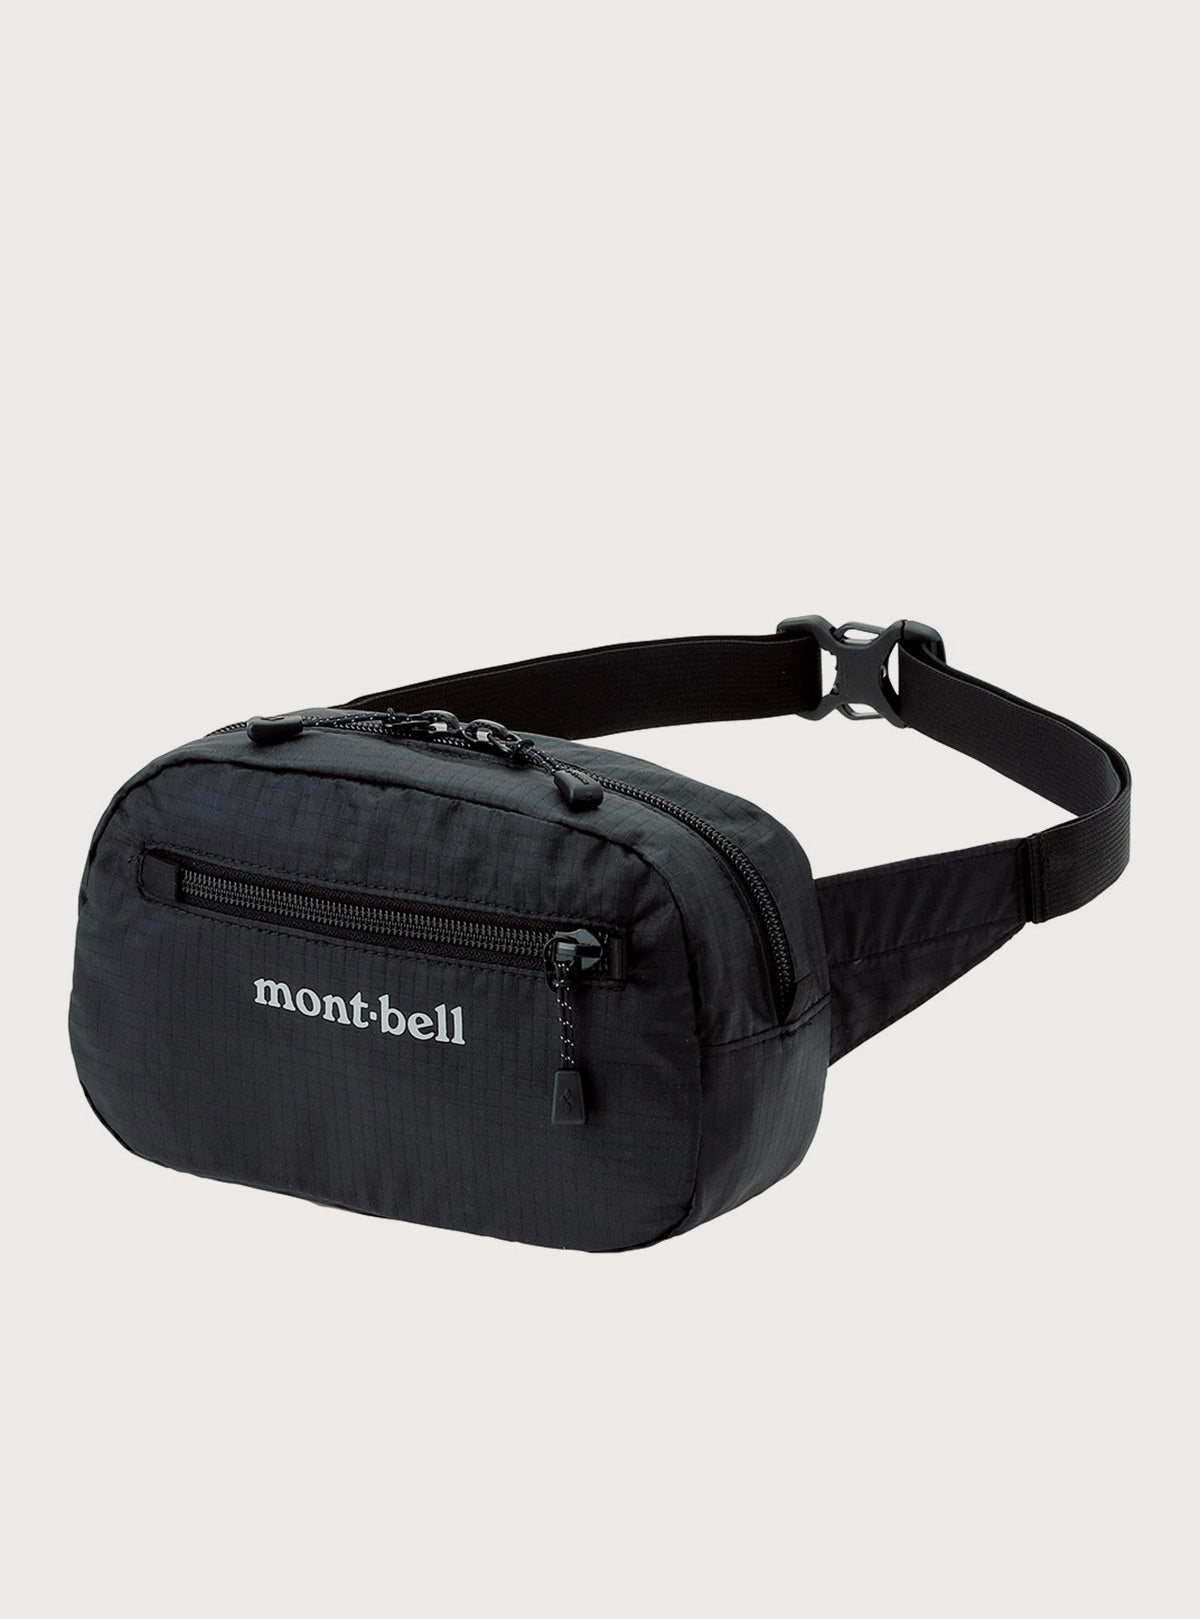 Montbell - Pocketable Lightpouch - Black